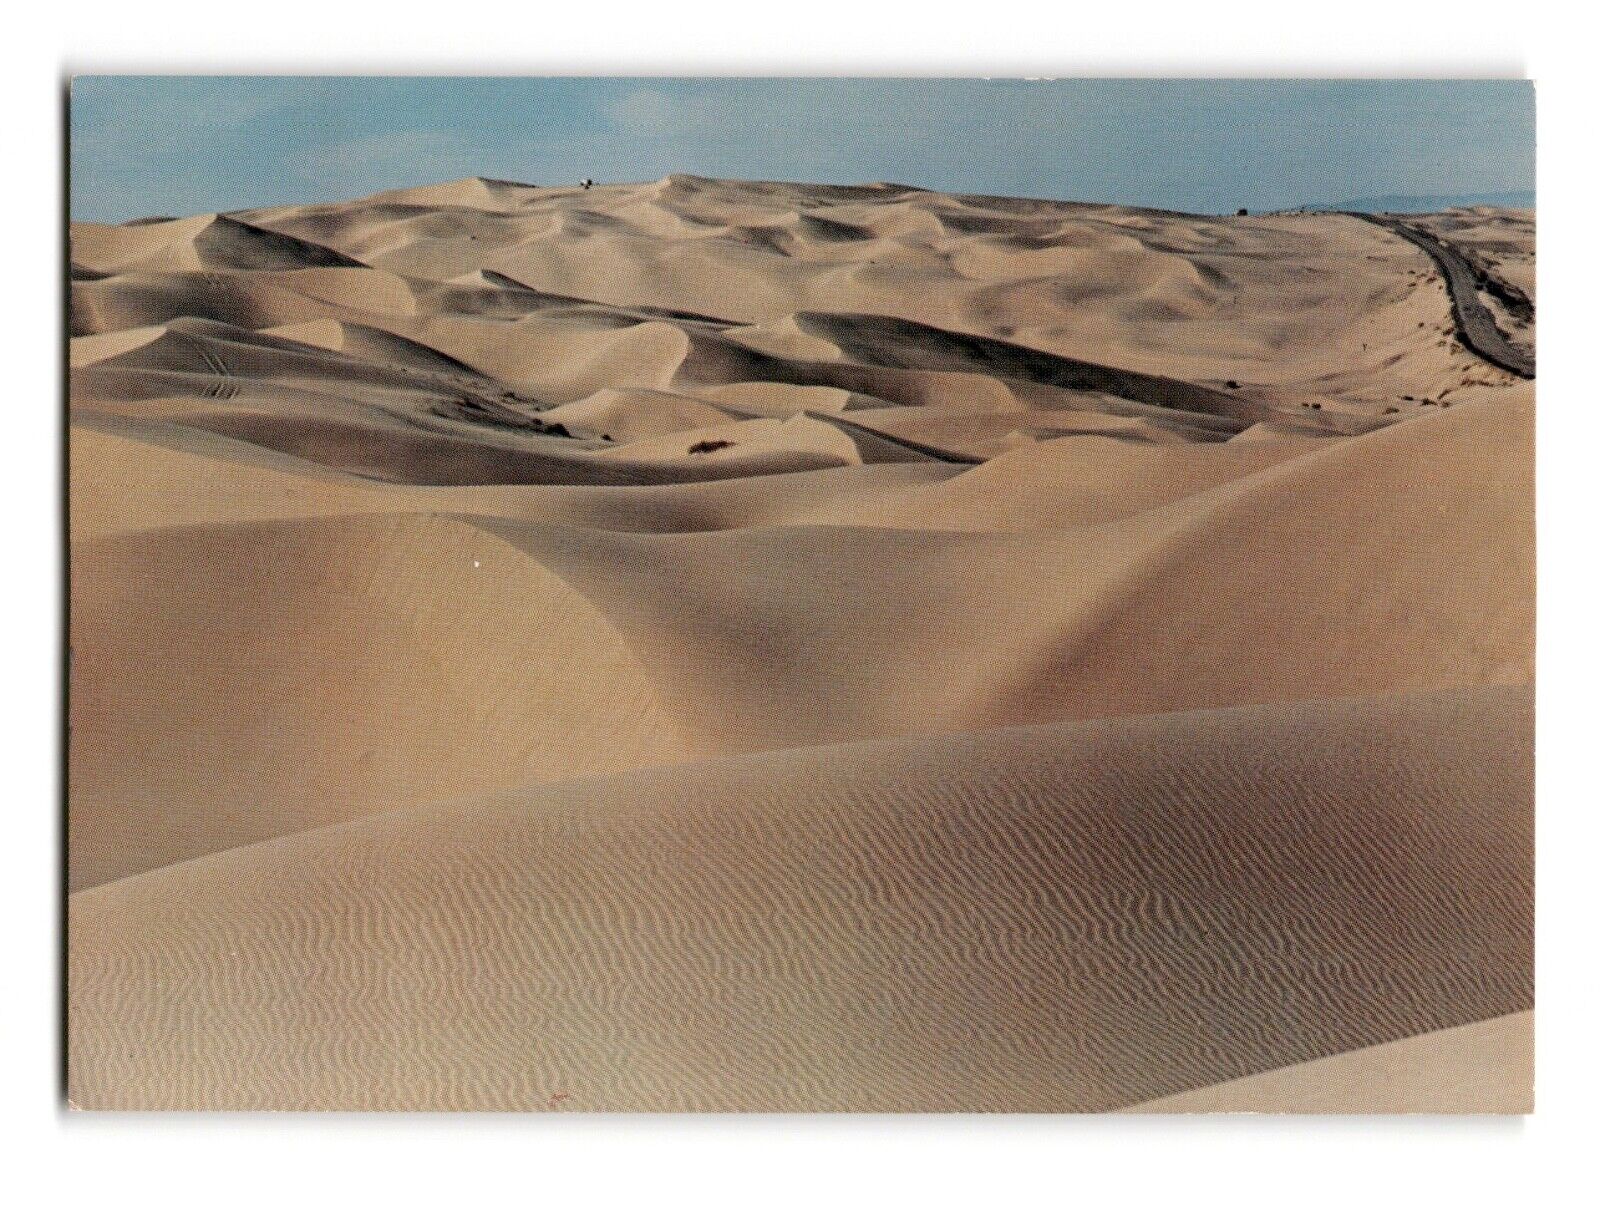 Algodones Dunes, California Natural Landscape Vintage Chrome Postcard